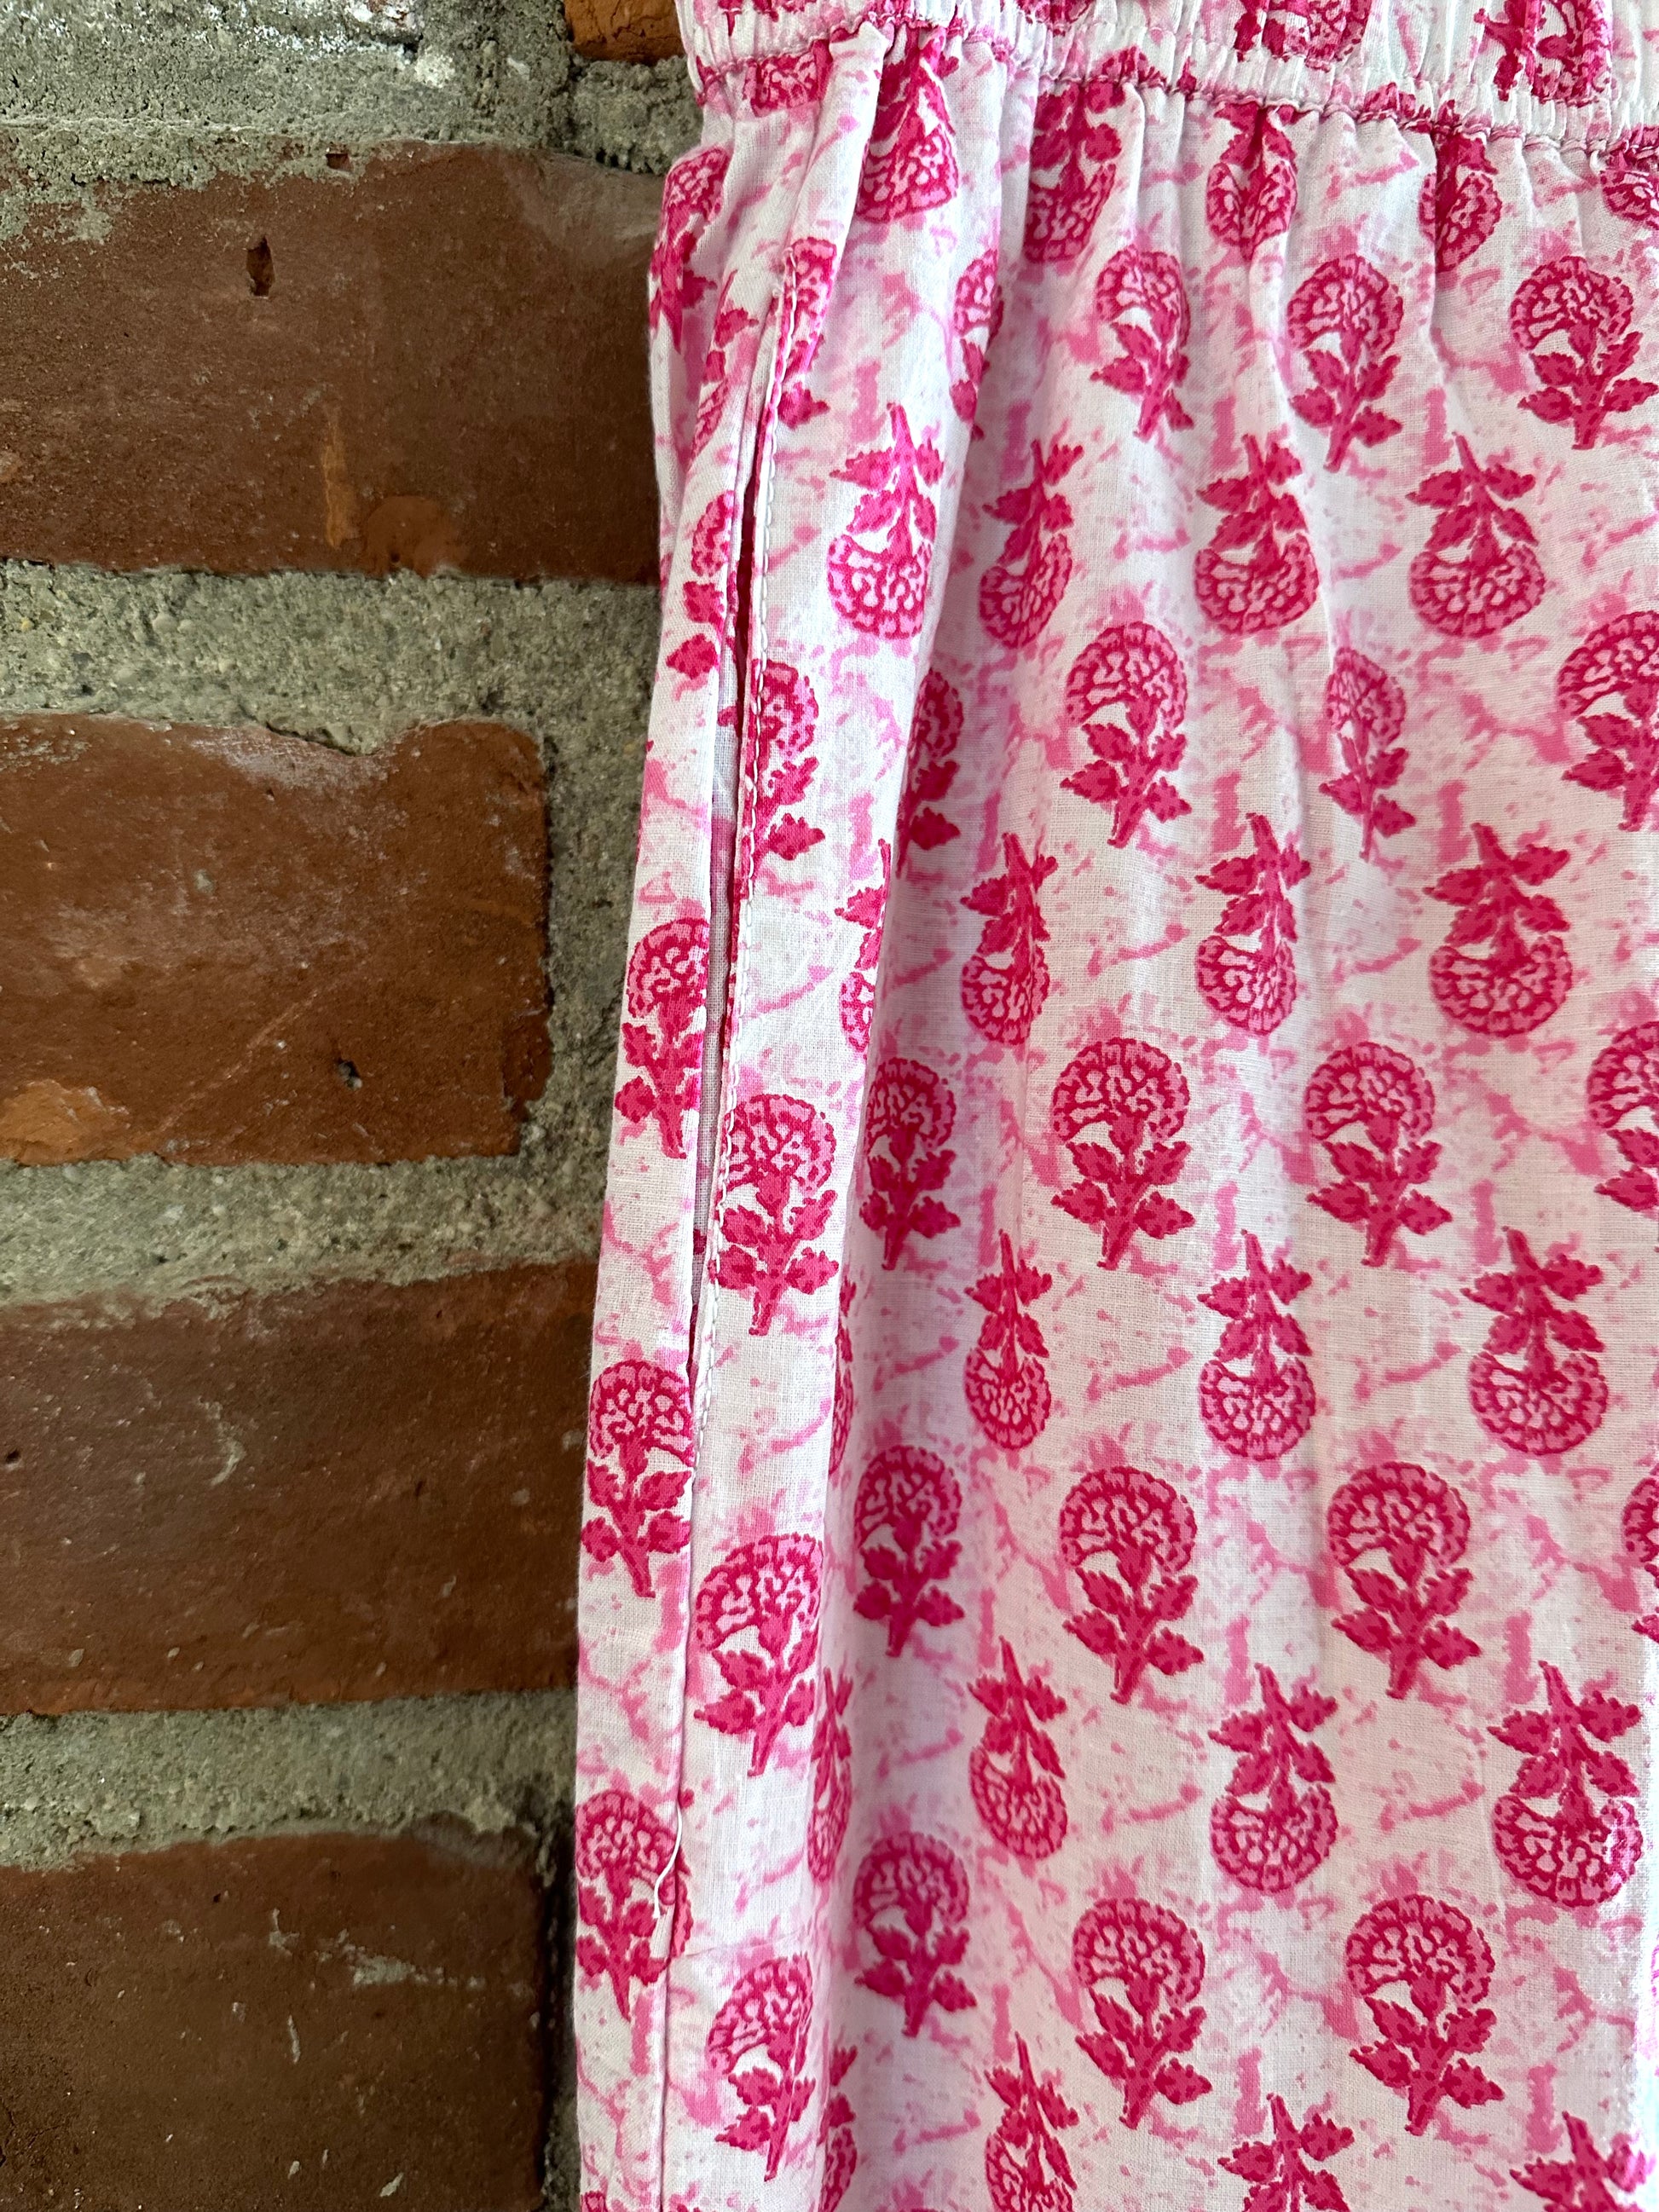 Mens Cotton Hand-block Print Pajamas in Pink and White - DharBazaar